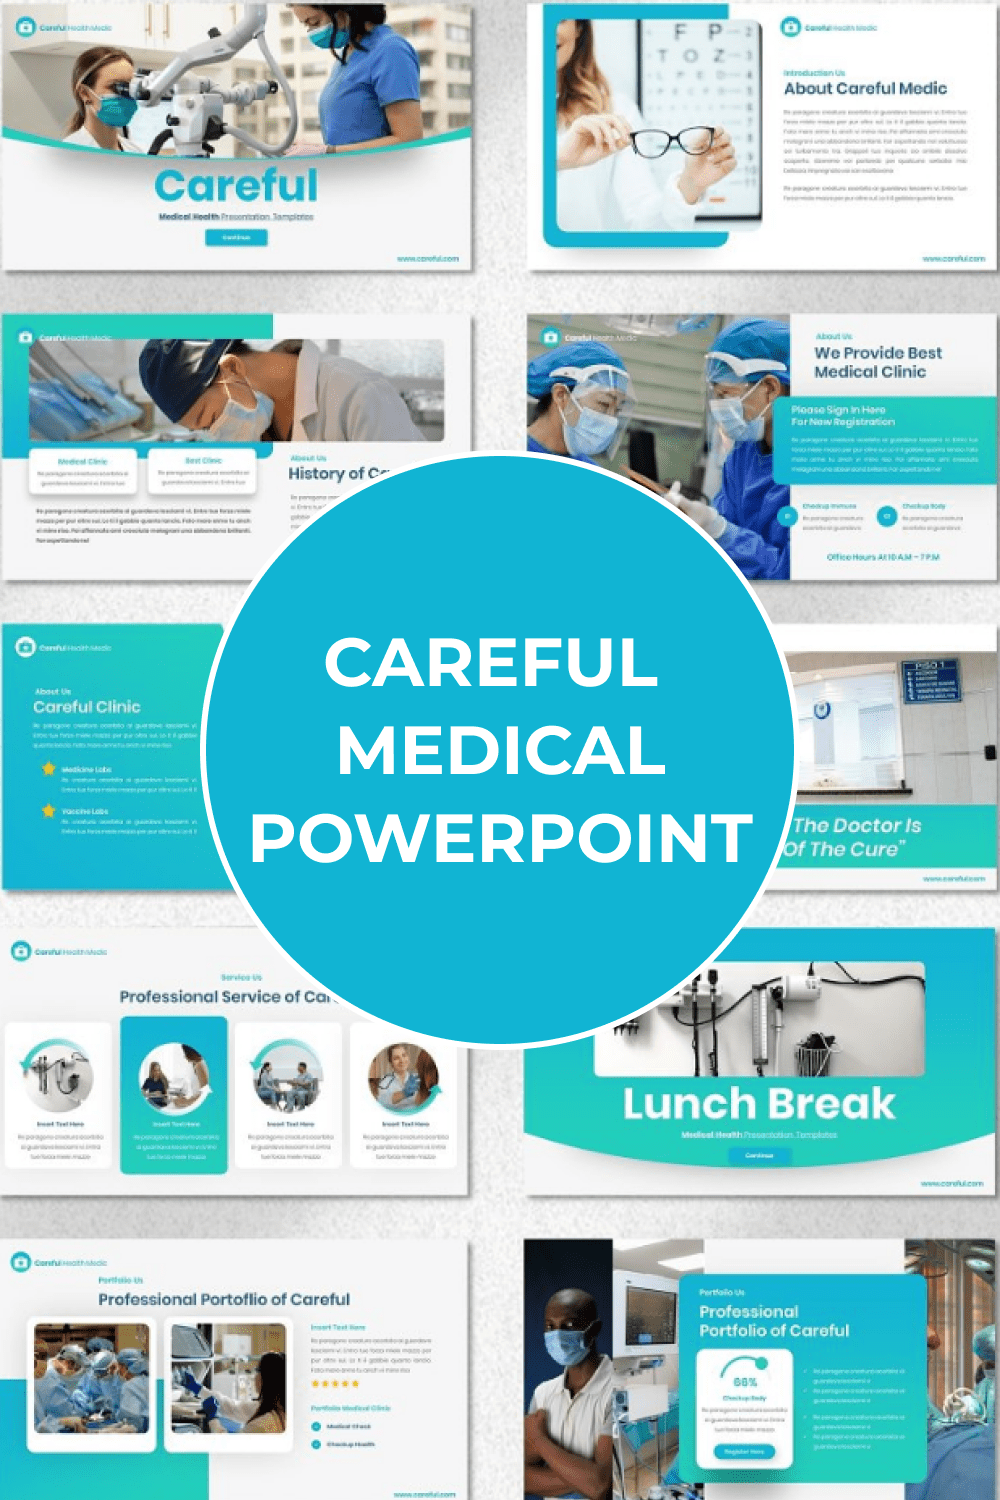 Careful - Medical Powerpoint Pinterest.